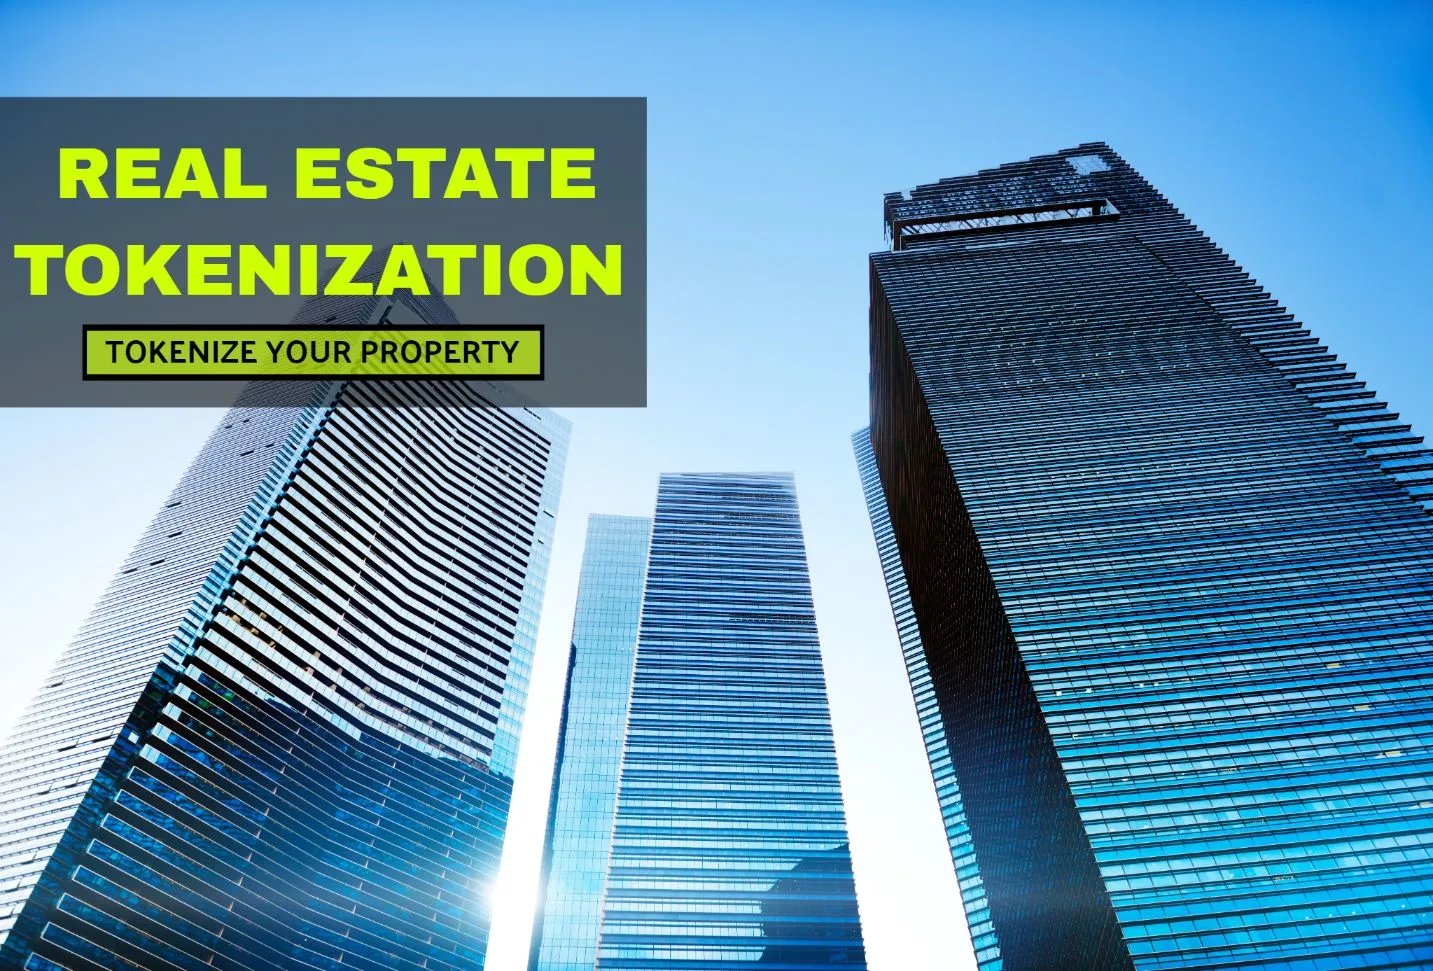 Real estate tokenization - Tokenize real estate